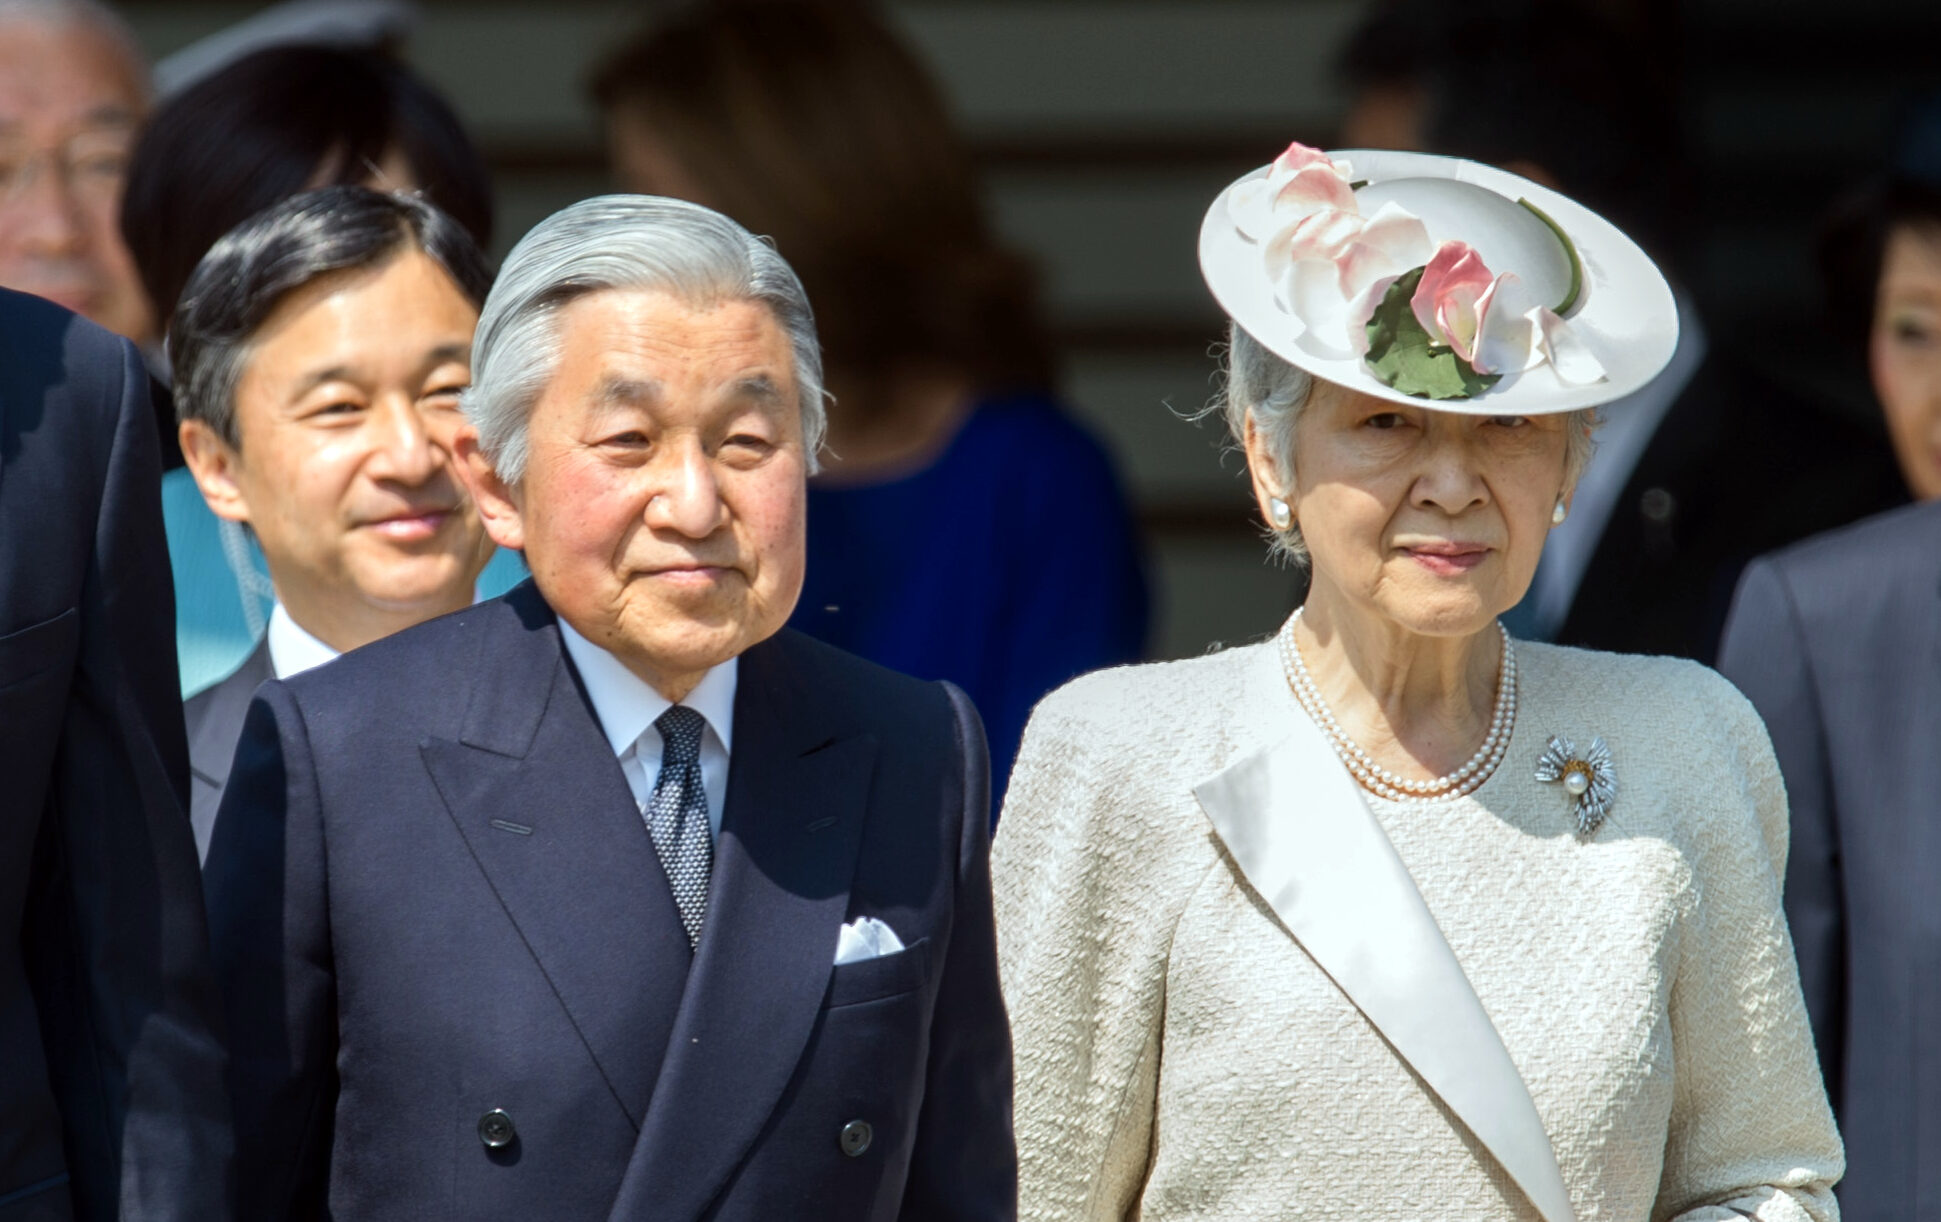 Empress Emerita Michiko Told To Take It Easy After Doctors Diagnose